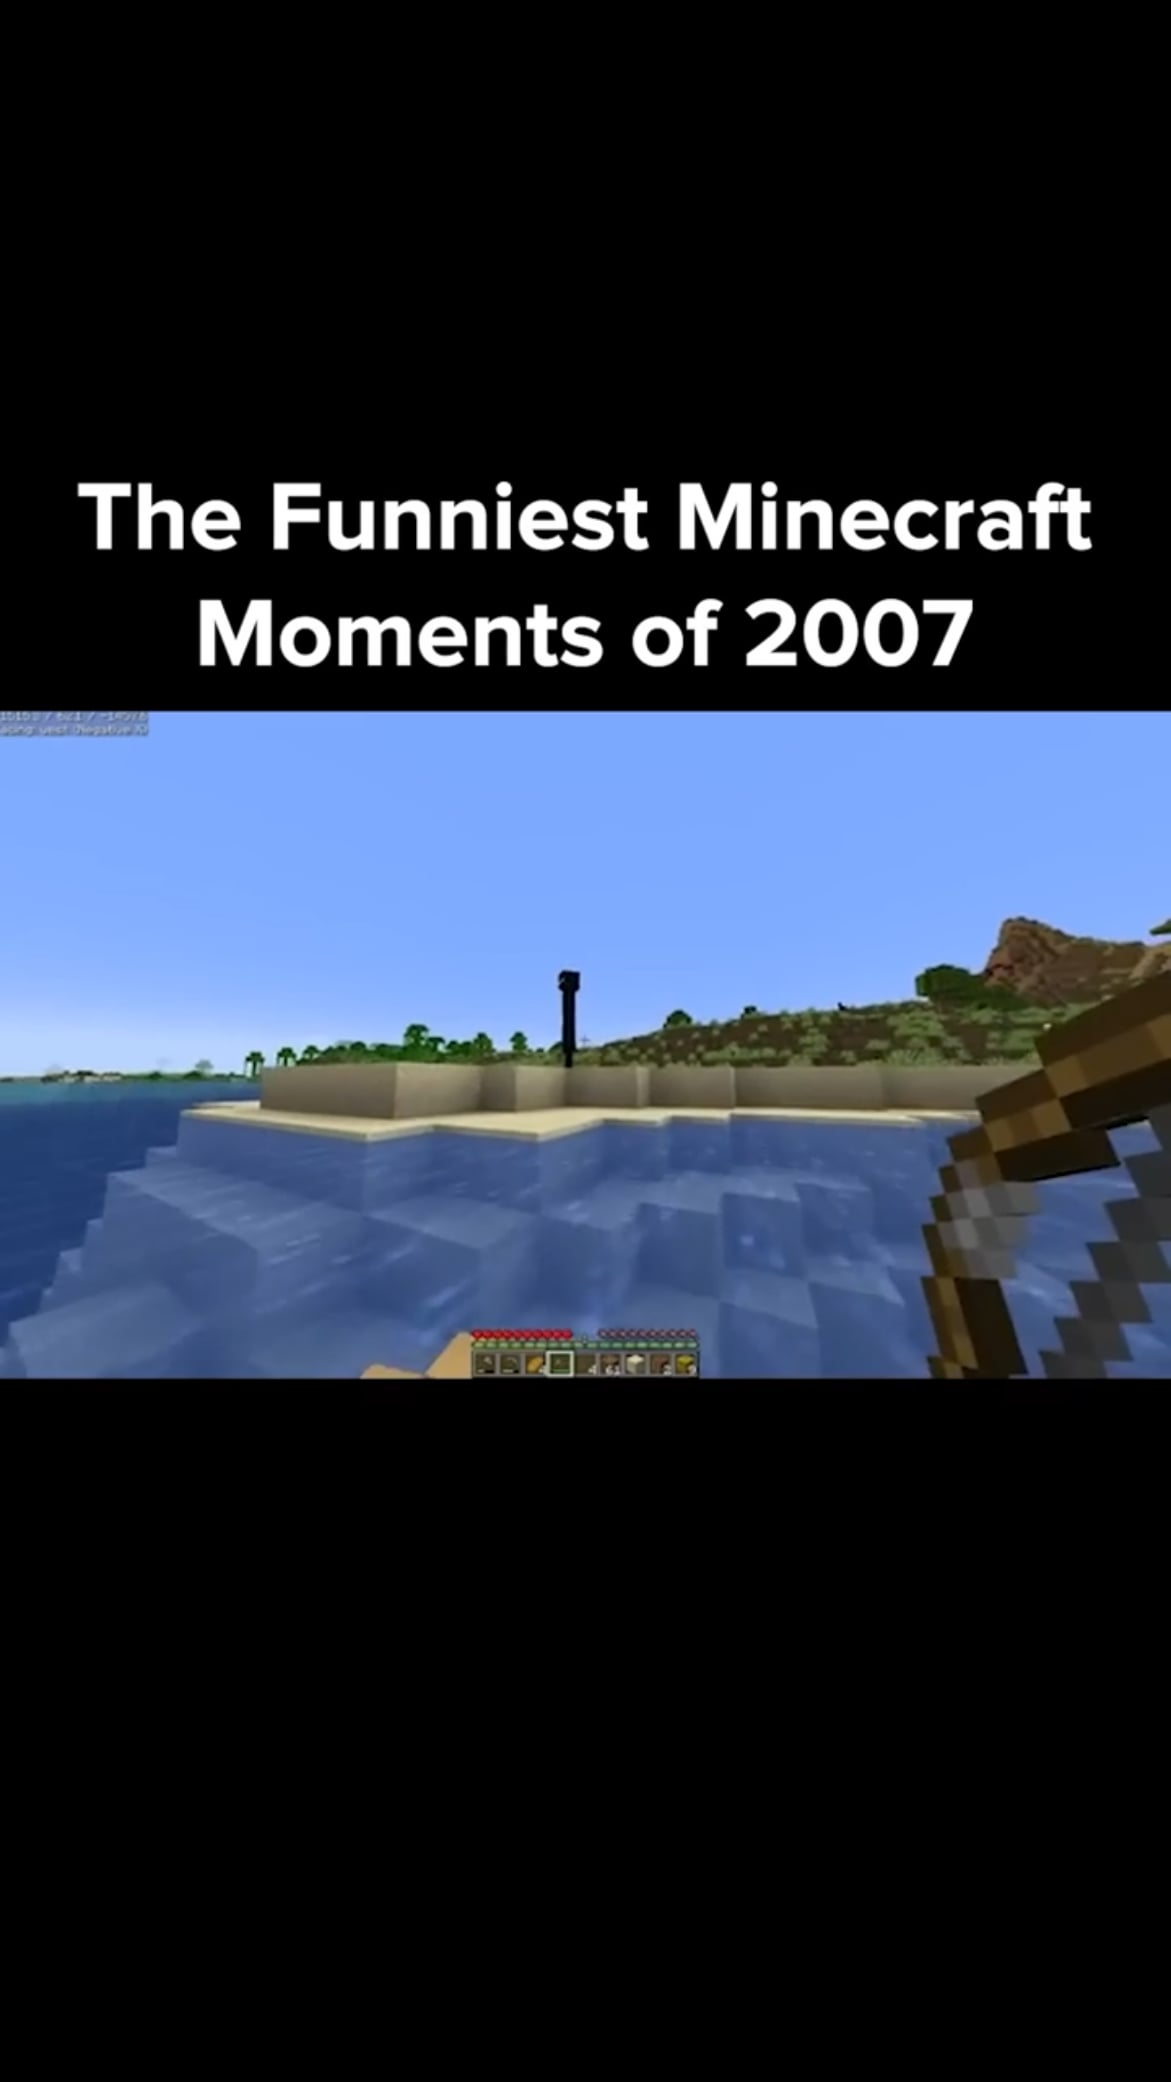 Minecraft Memes - "Crafty Memes: Minecraft Edition"